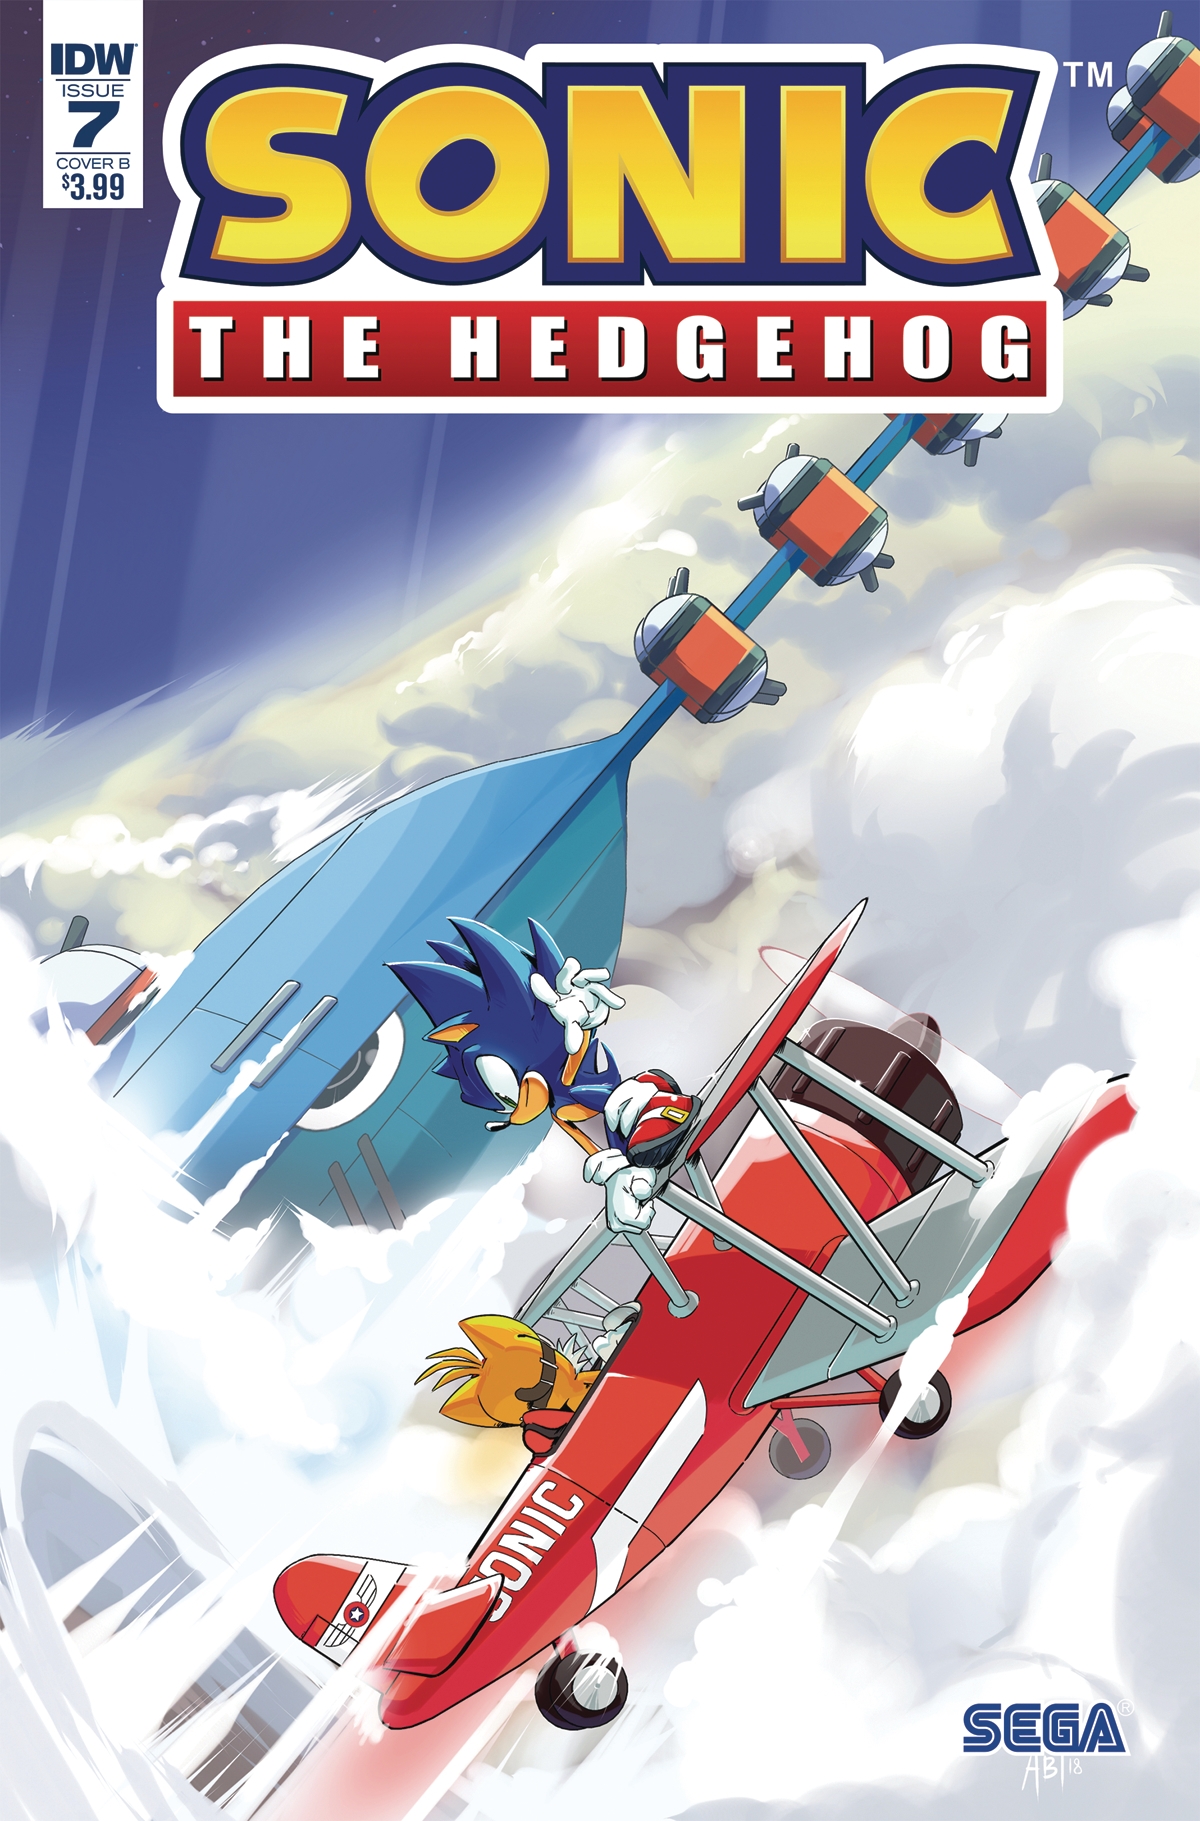 Sonic The Hedgehog #7 Cover B